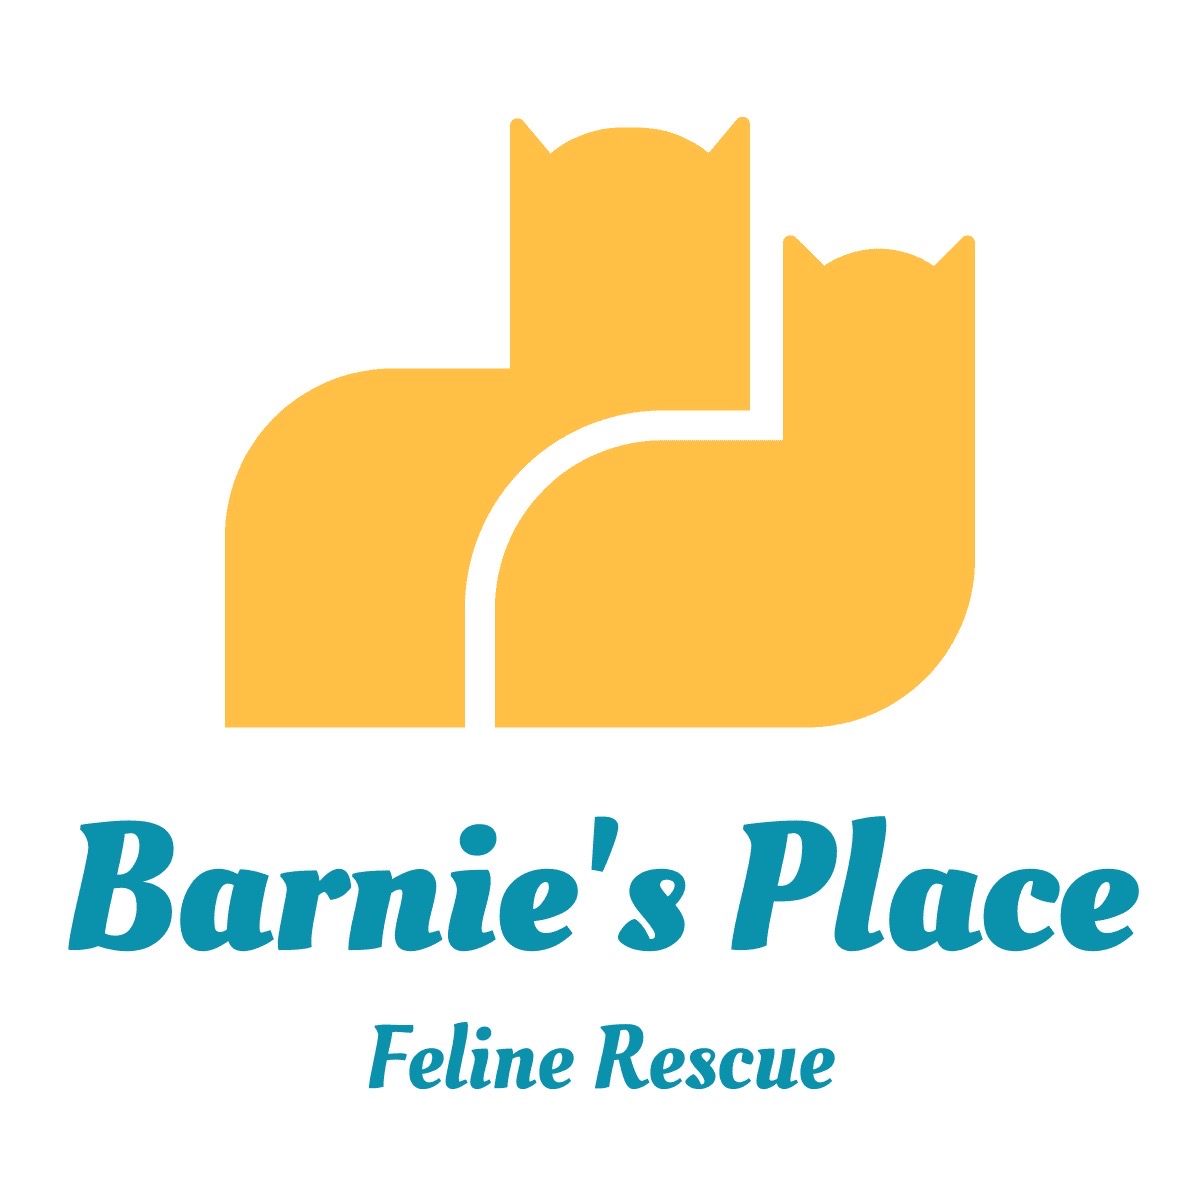 Barnies Place Feline Rescue